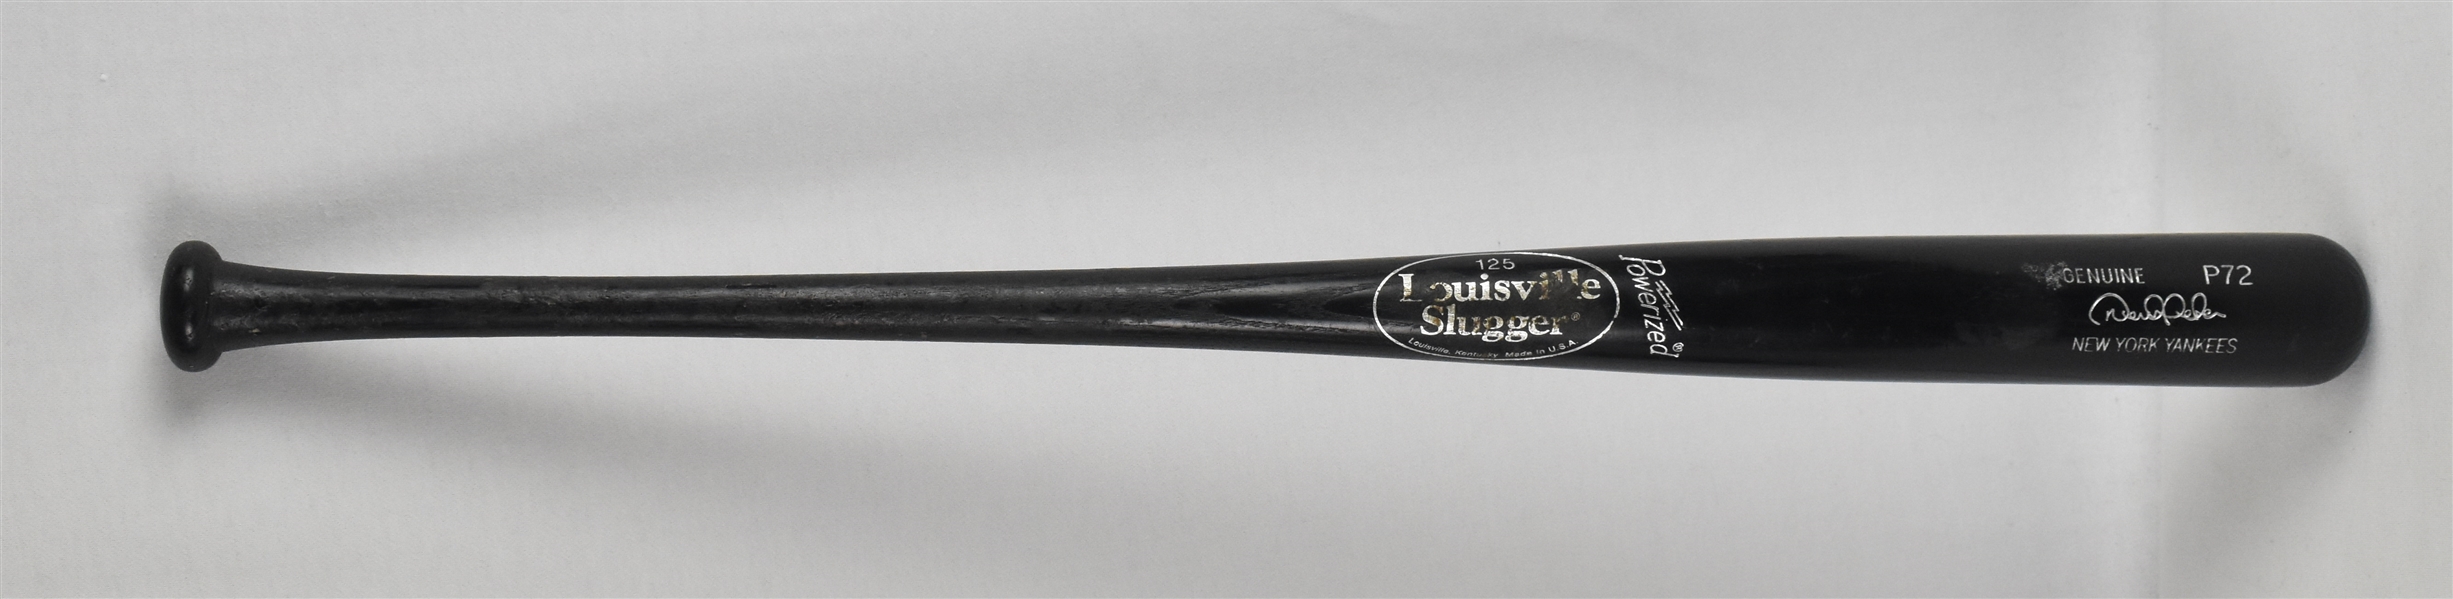 Derek Jeter 2010 New York Yankees Game Used Baseball Bat MEARS A8